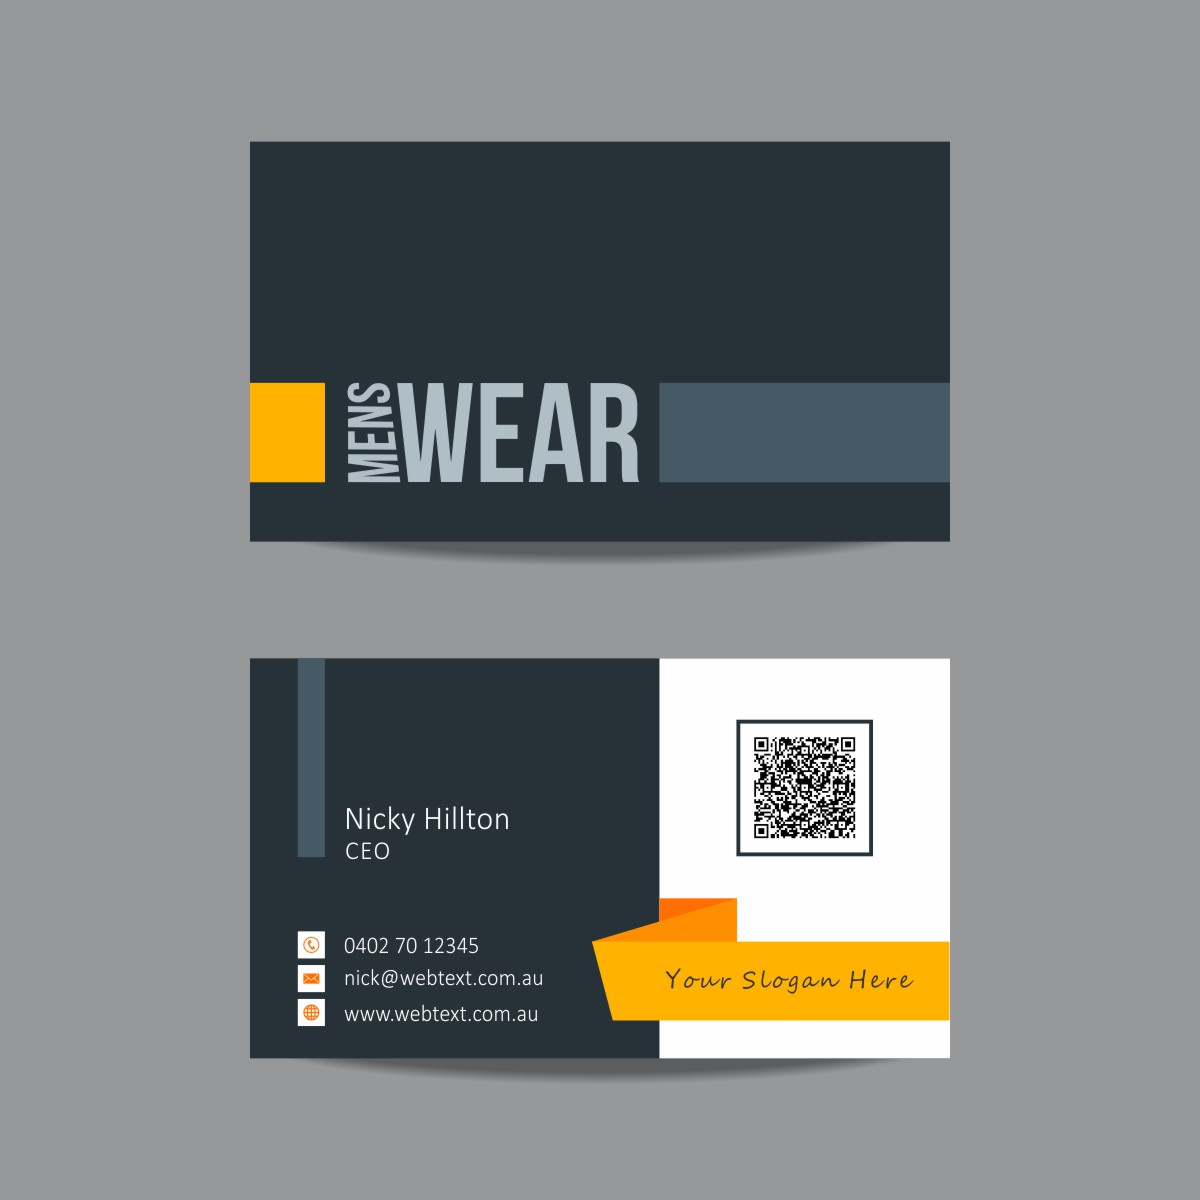 free business card maker onlie template